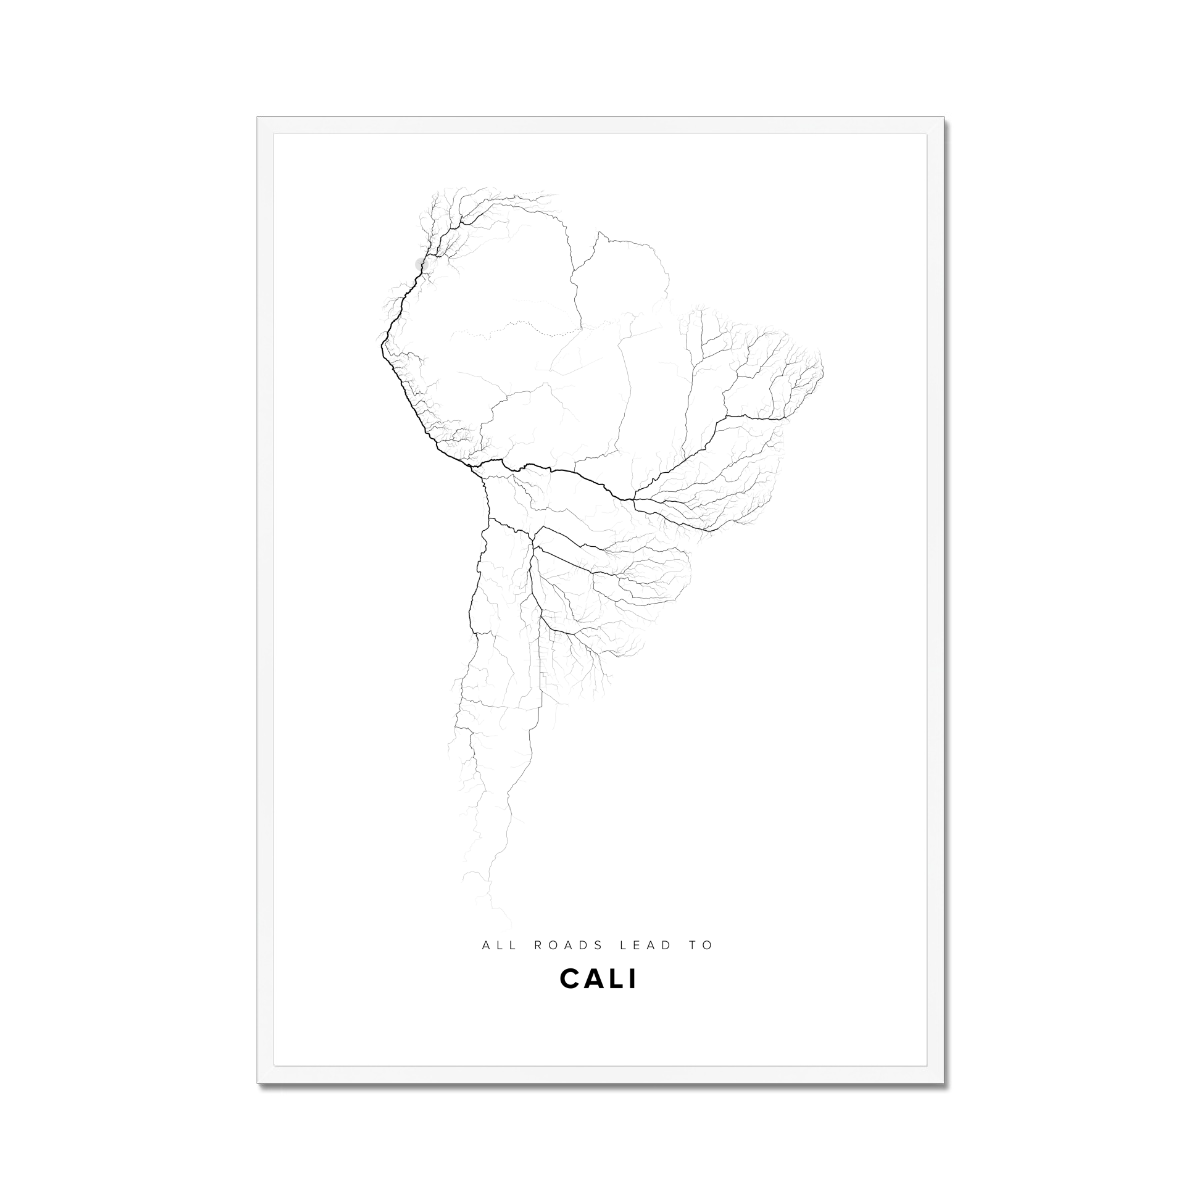 All roads lead to Cali (Colombia) Fine Art Map Print